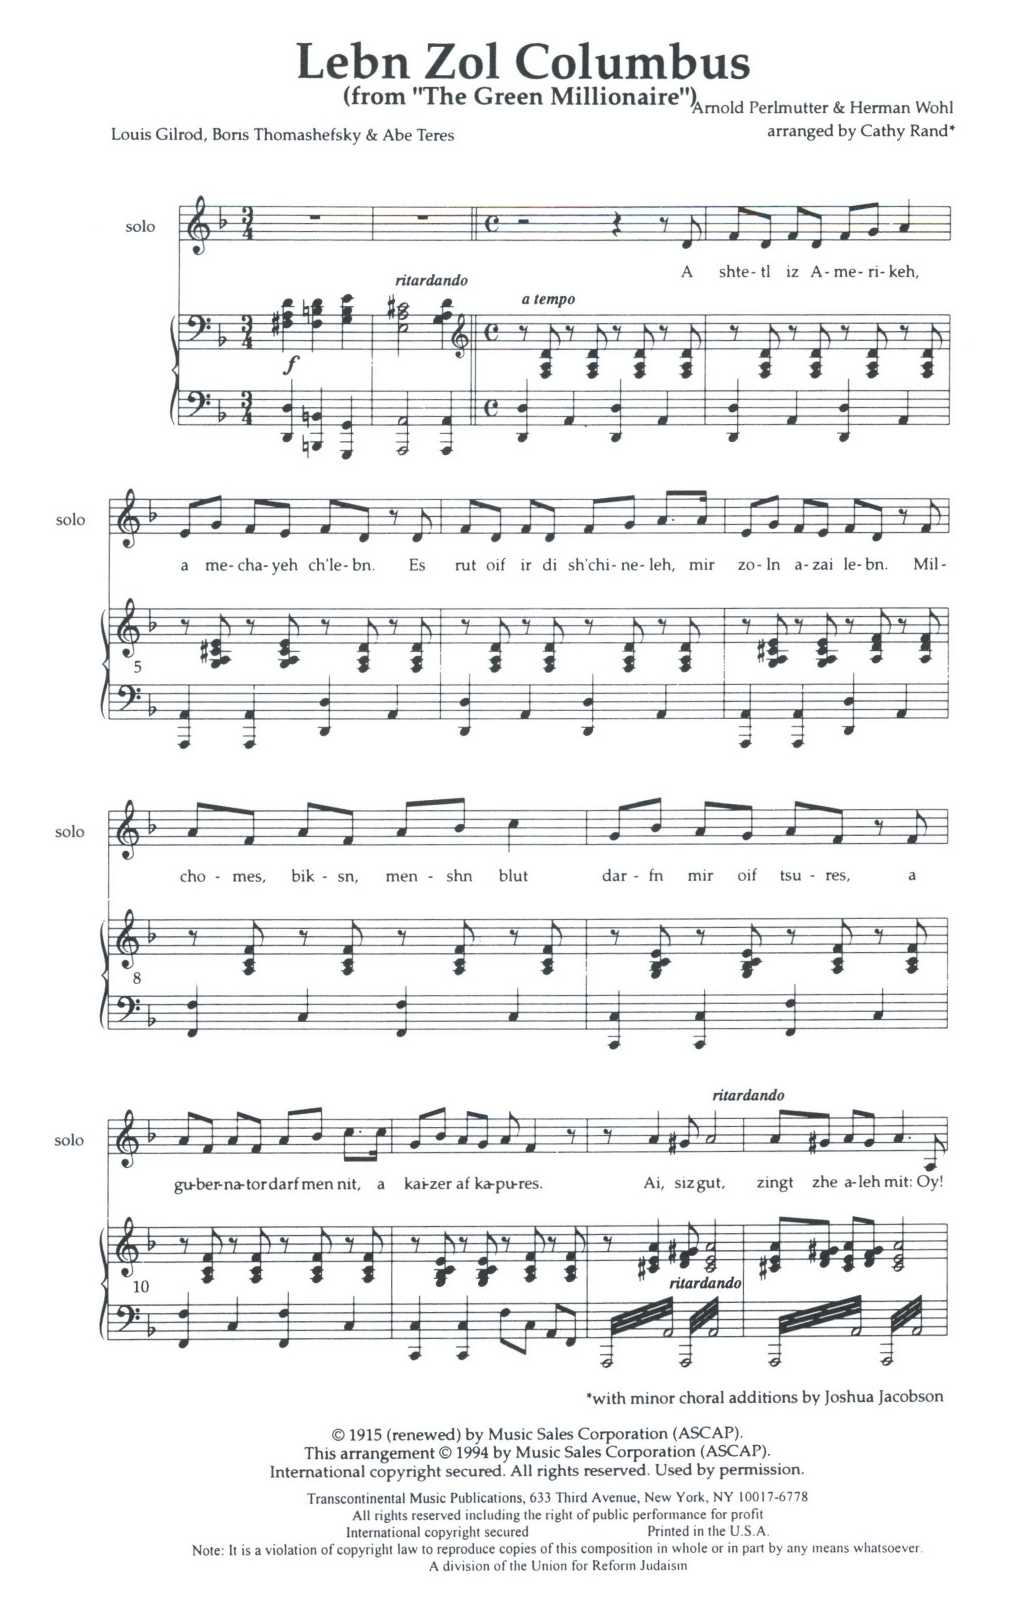 Aaron Perlmutter Lebn Zol Columbus Solo (high), Piano Sheet Music